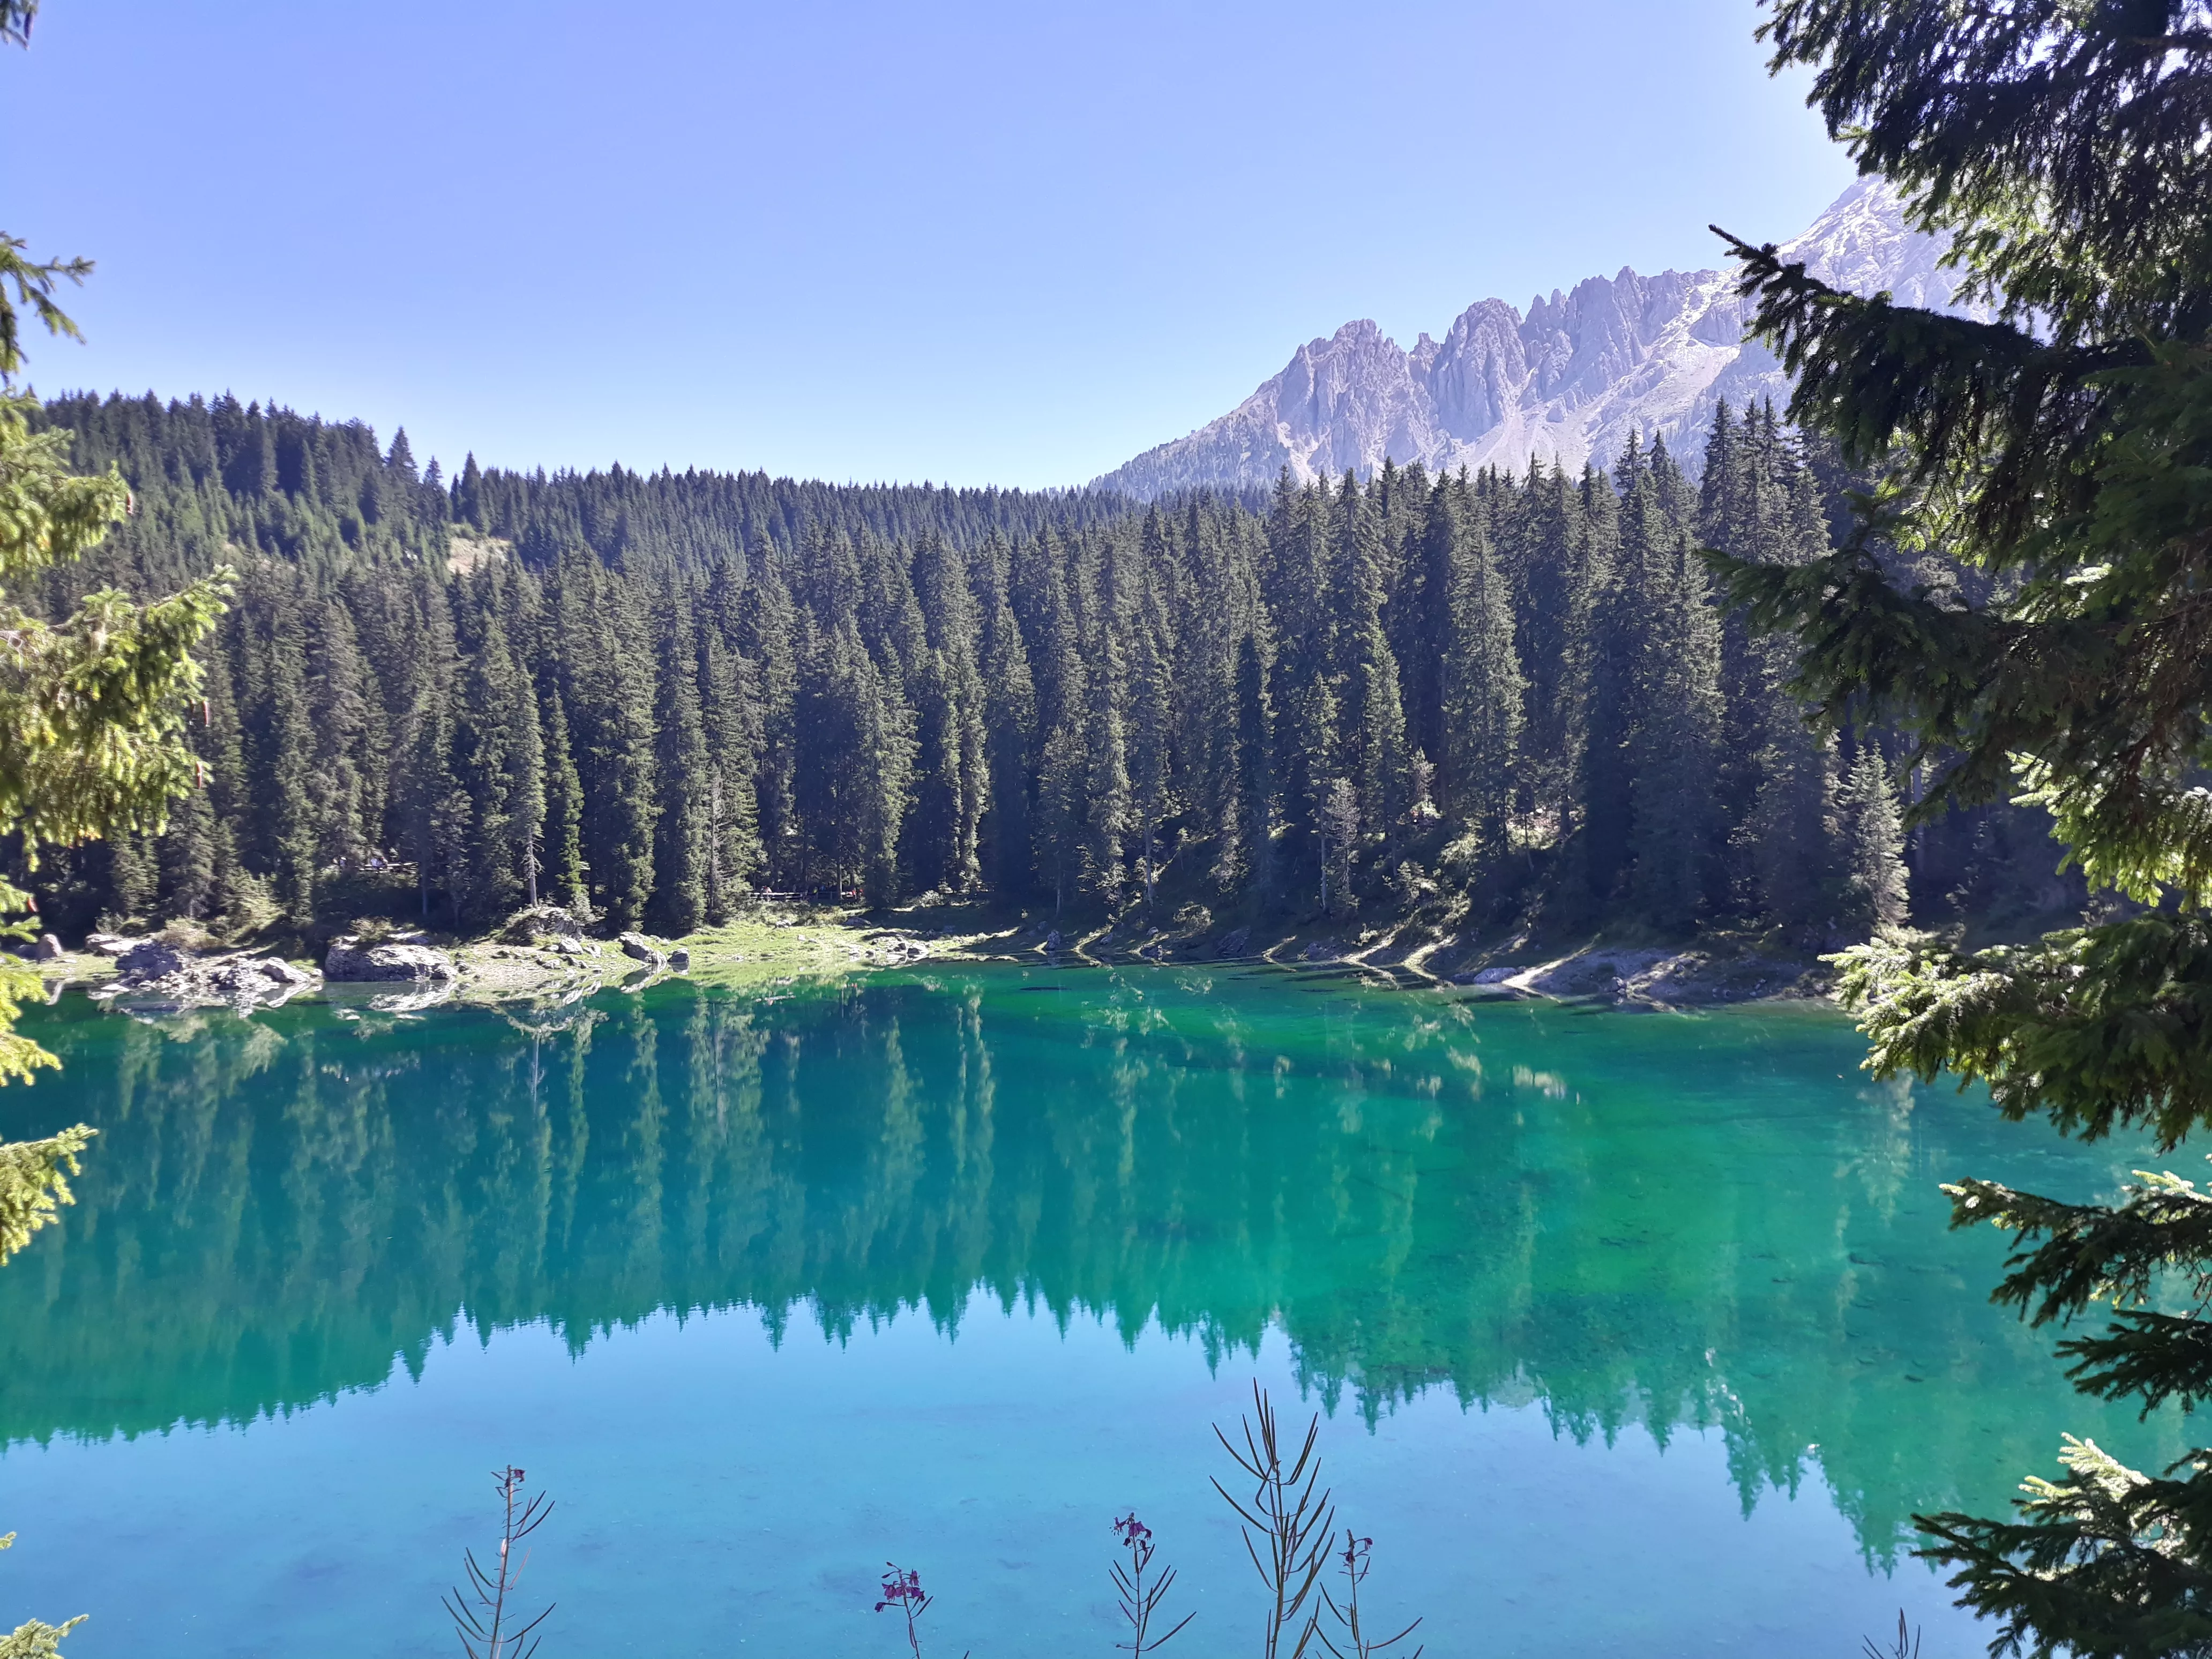 Lago di Carezza in Italy, Europe | Lakes - Rated 4